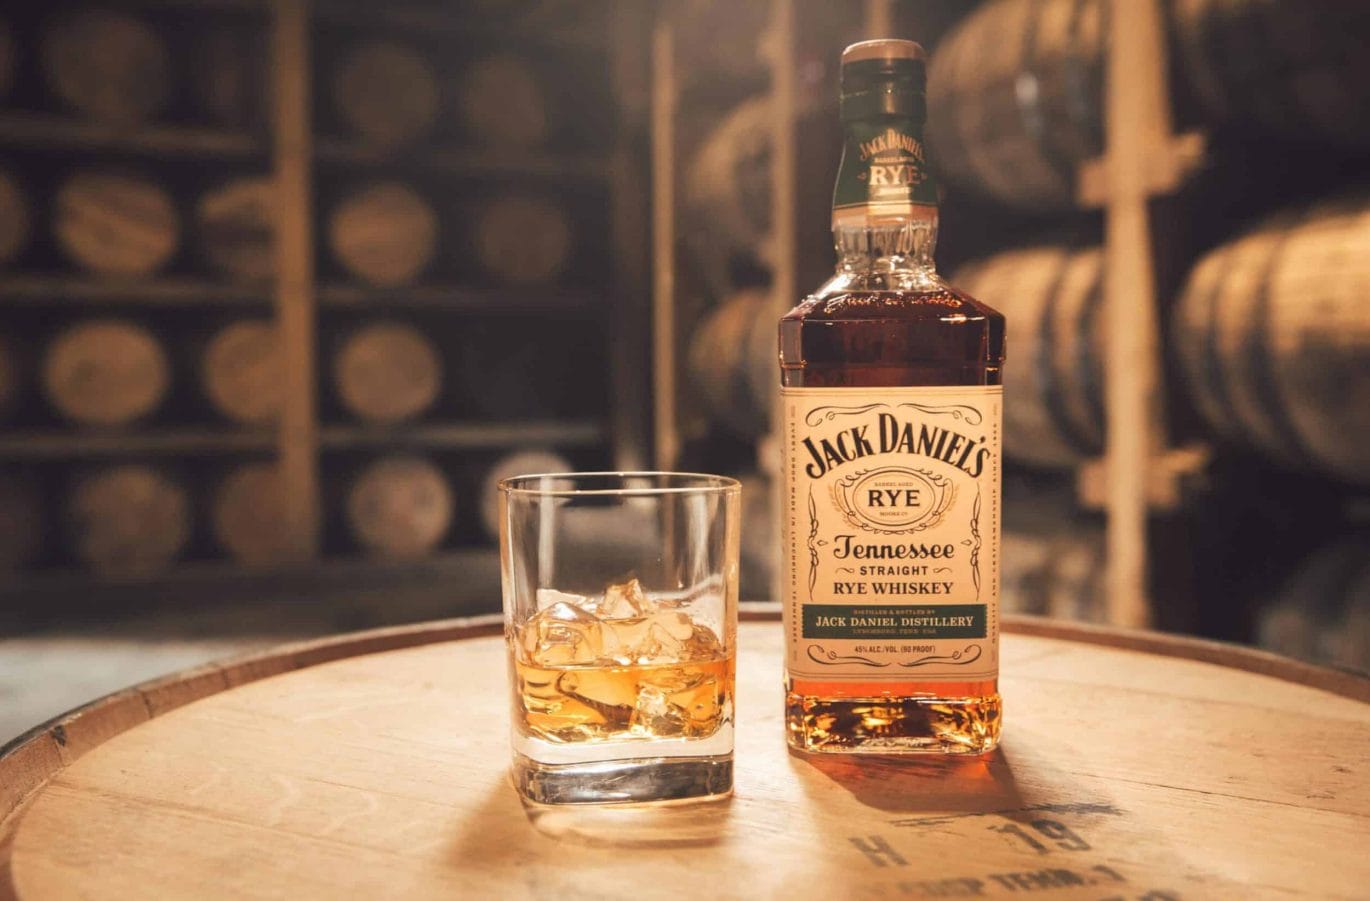 Jack Daniel’s Tennessee Rye